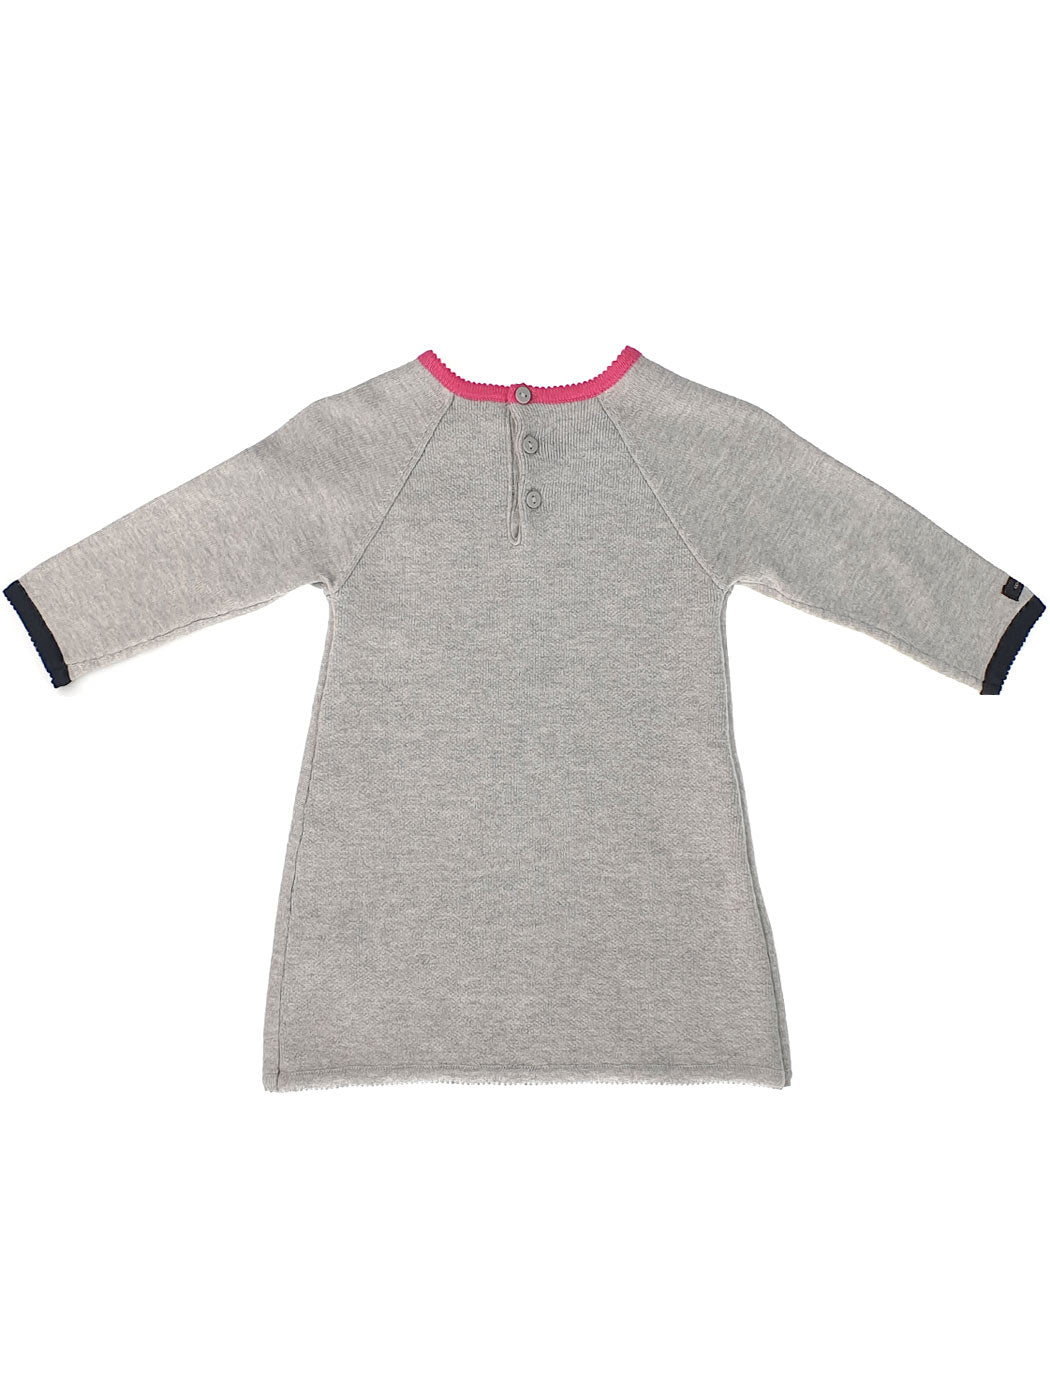 Baby Girl's knitted dress-CM30163-Grey